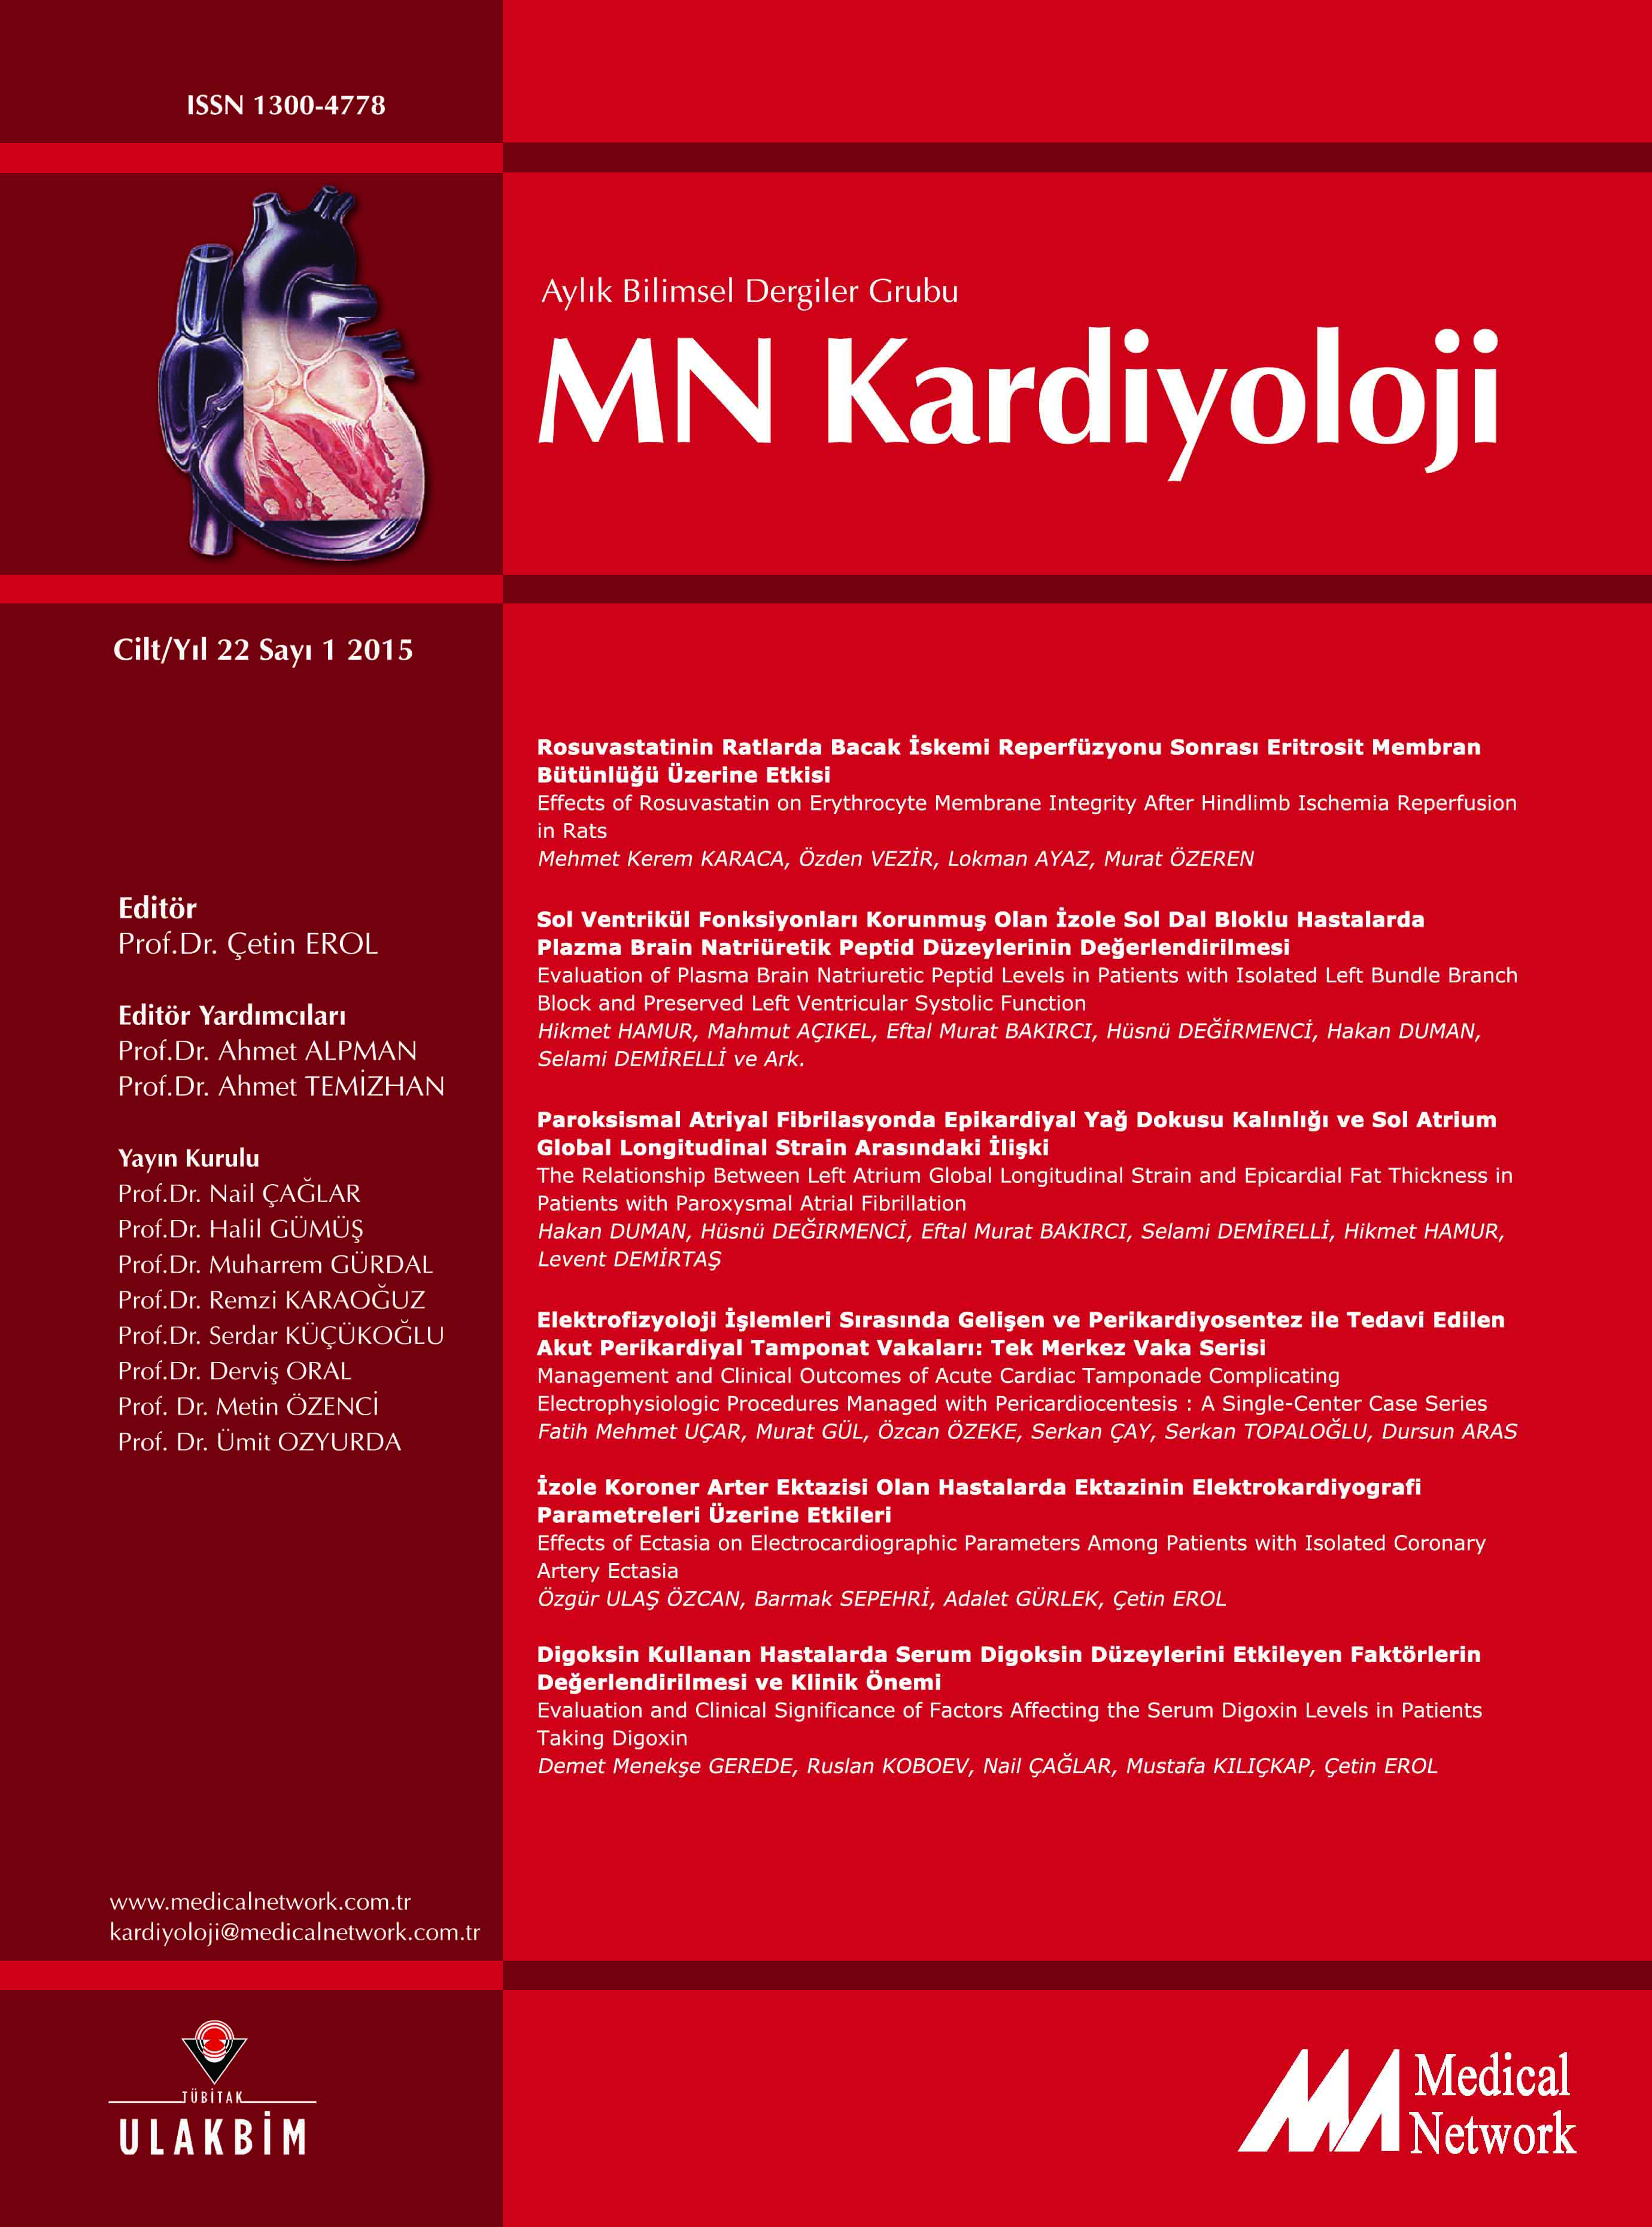 <p>MN Kardiyoloji Cilt: 22 Say: 1 2015 (MN Cardiology Volume: 22 No: 1 2015)</p>